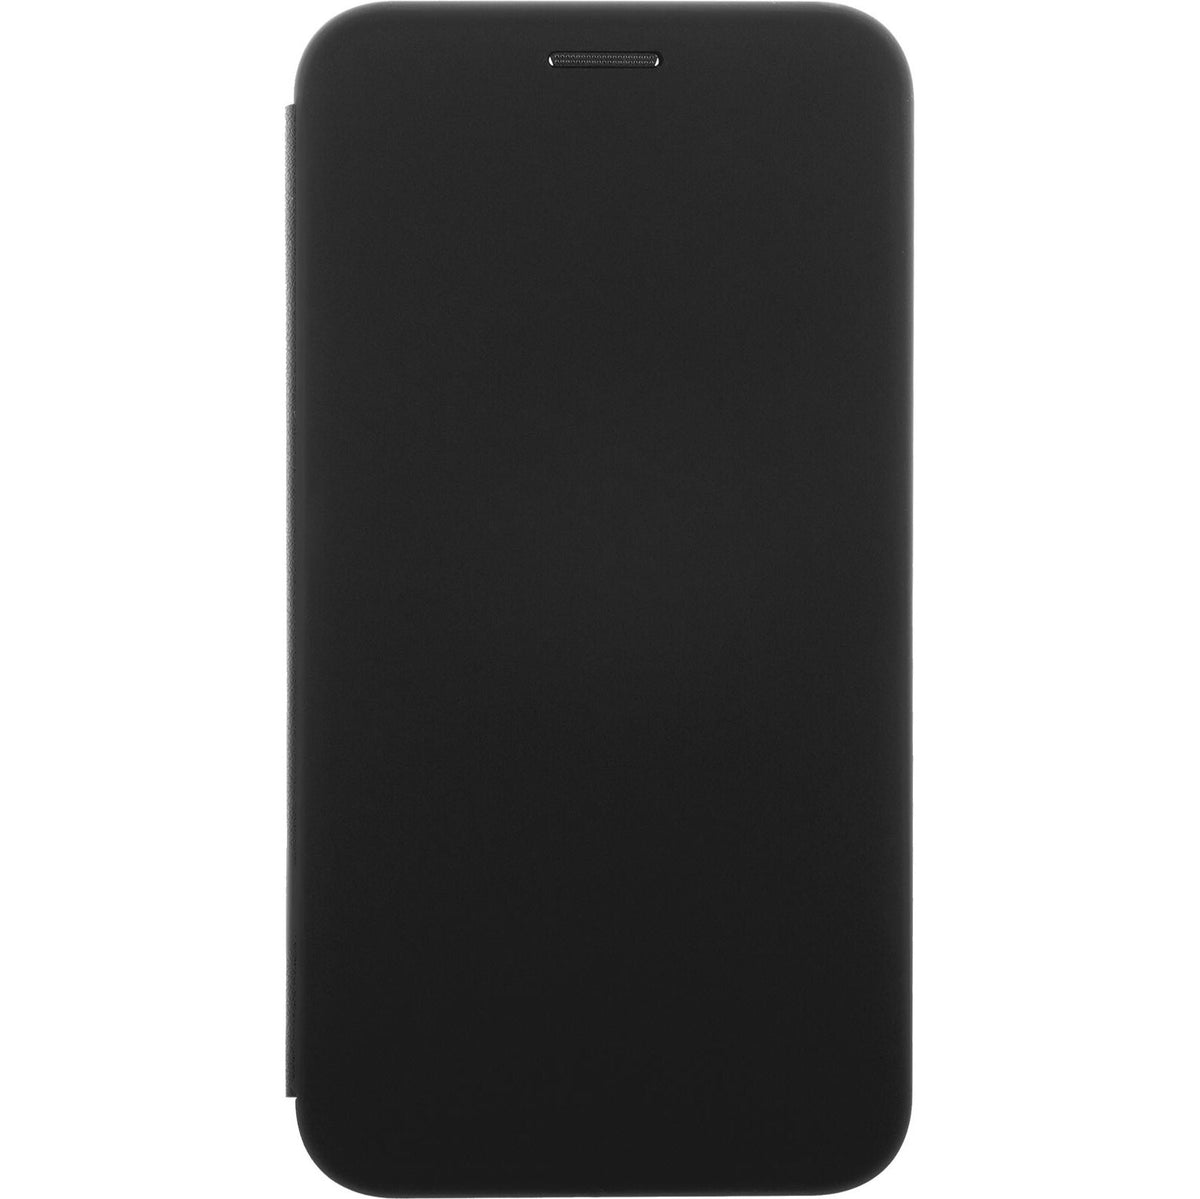 Puzdro pre Apple iPhone XR, čierna